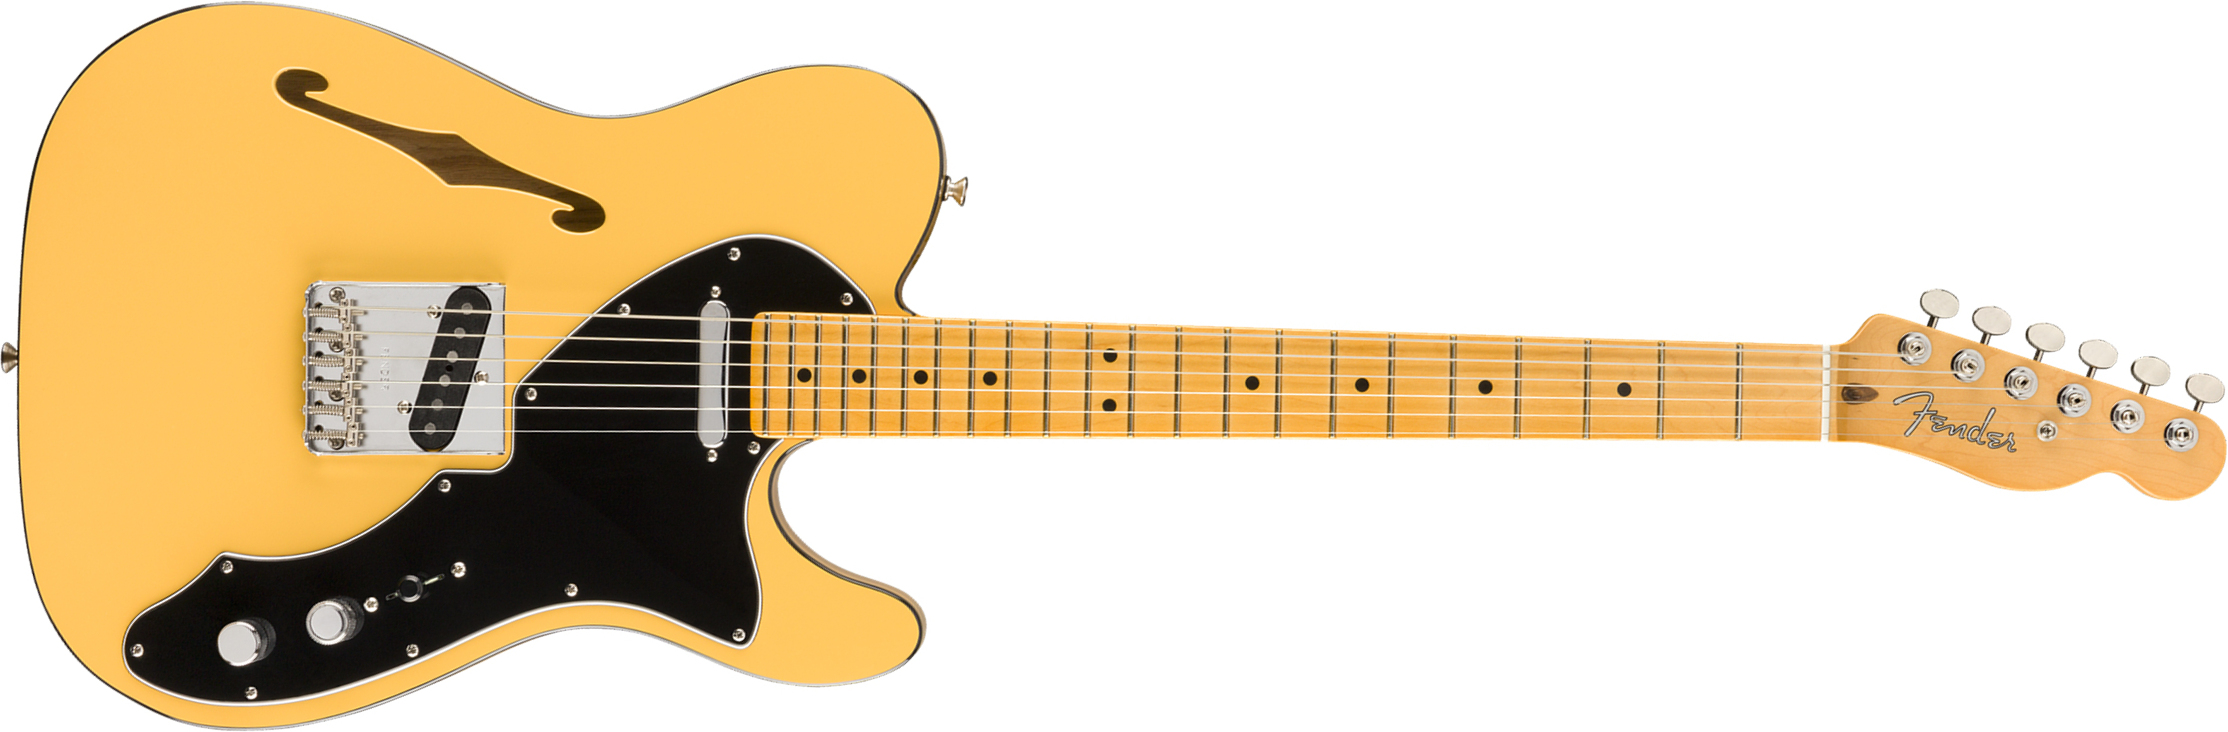 Fender Britt Daniel Tele Thinline Signature Ss Mn - Amarillo Gold - Semi hollow elektriche gitaar - Main picture